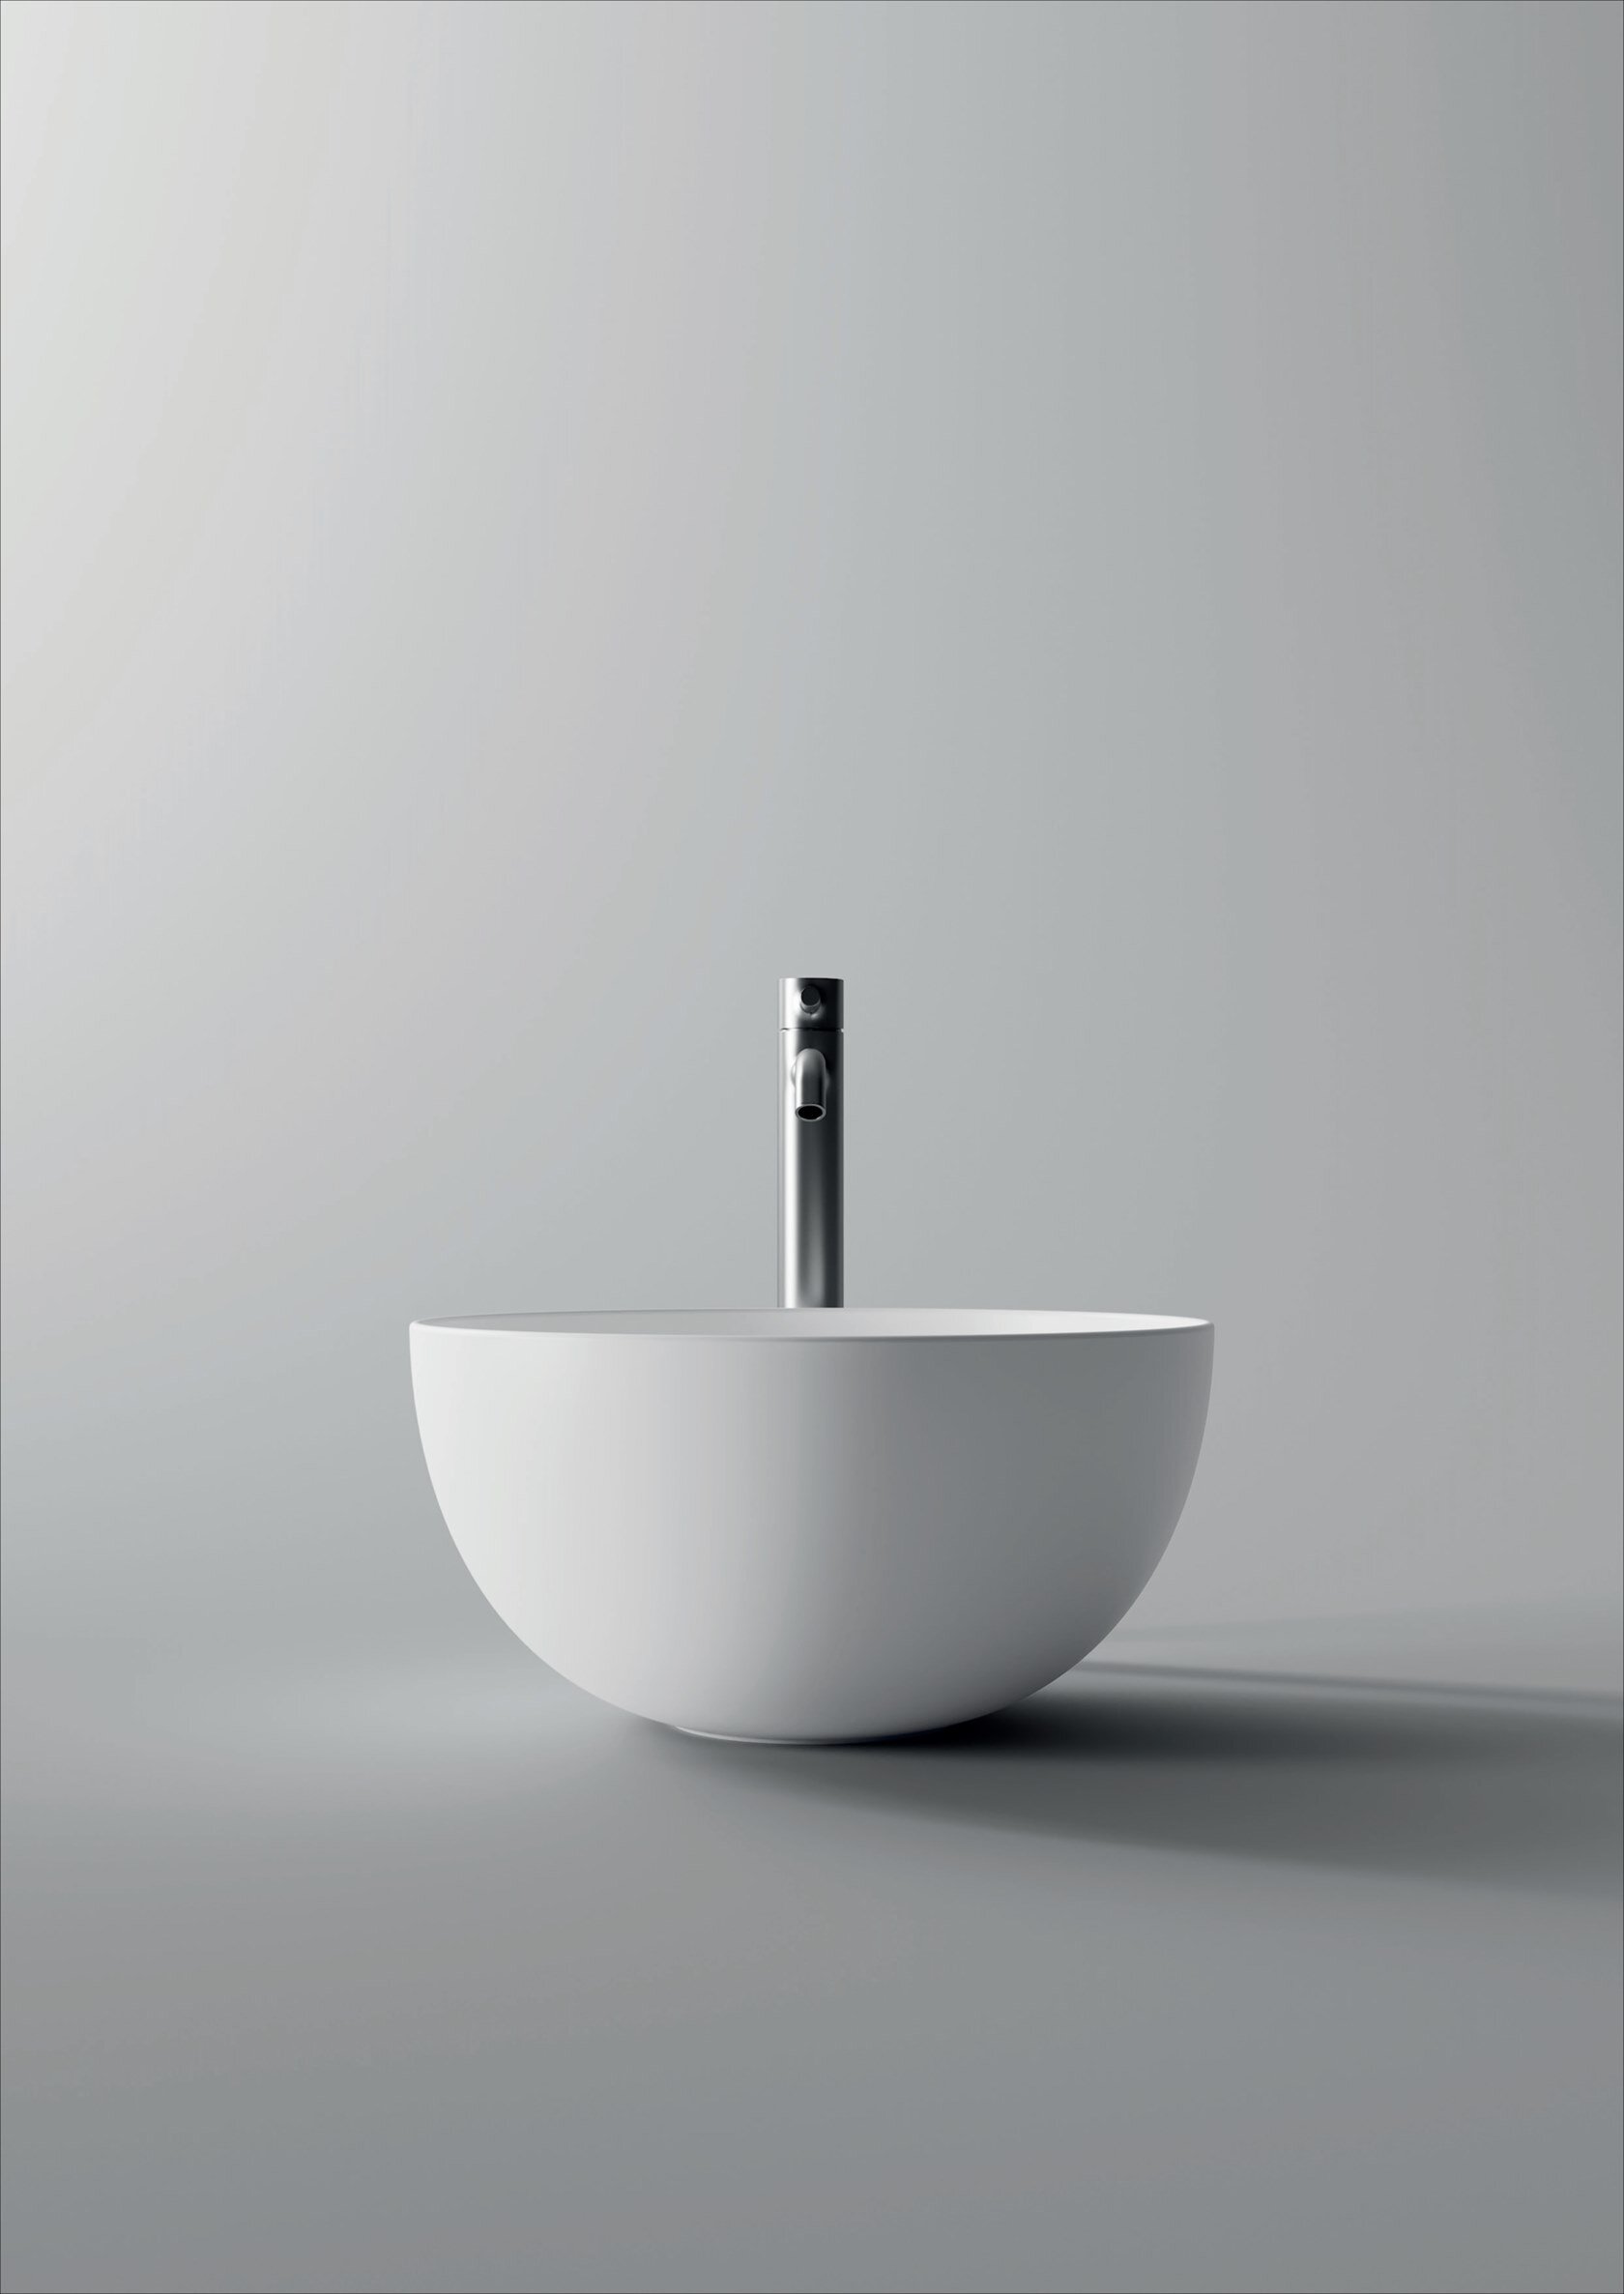 2b_UNICA-Round-washbasin-Alice-Ceramica-365386-relc8d7175b.jpeg